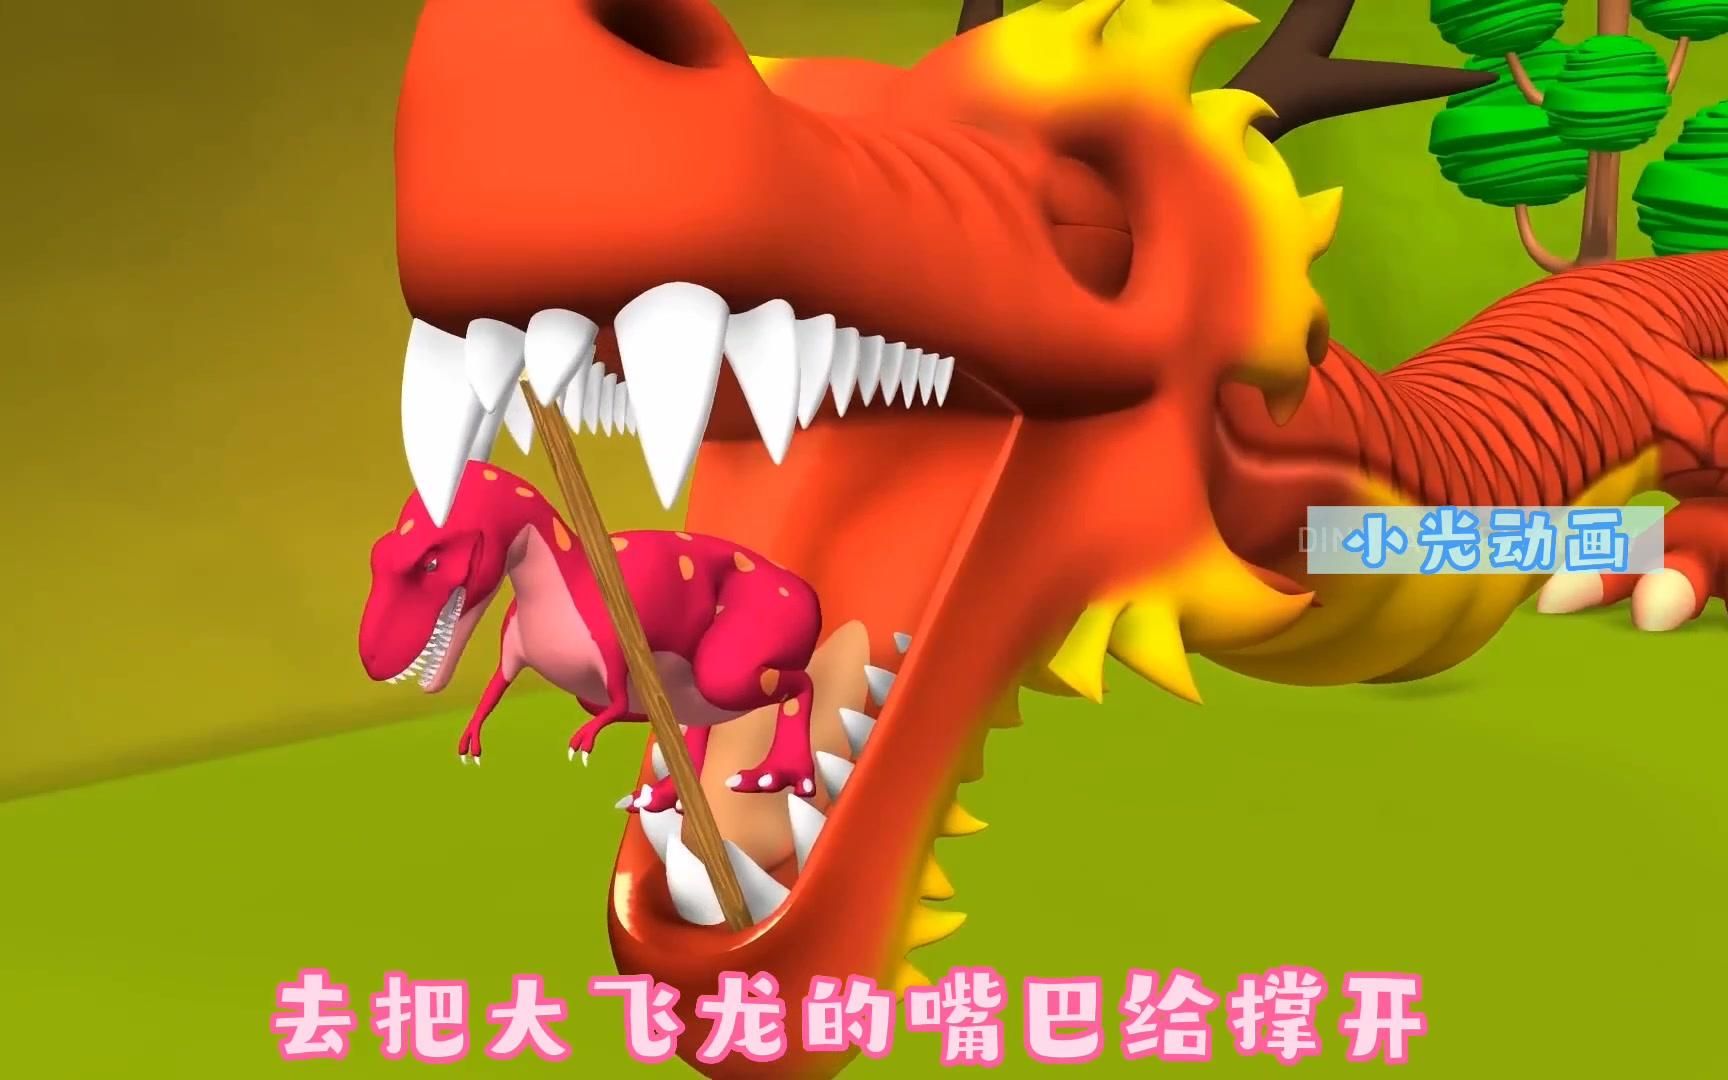 3D全息恐龙动画_3000X3000_高清视频素材下载(编号:4481121)_影视包装_光厂(VJ师网) www.vjshi.com